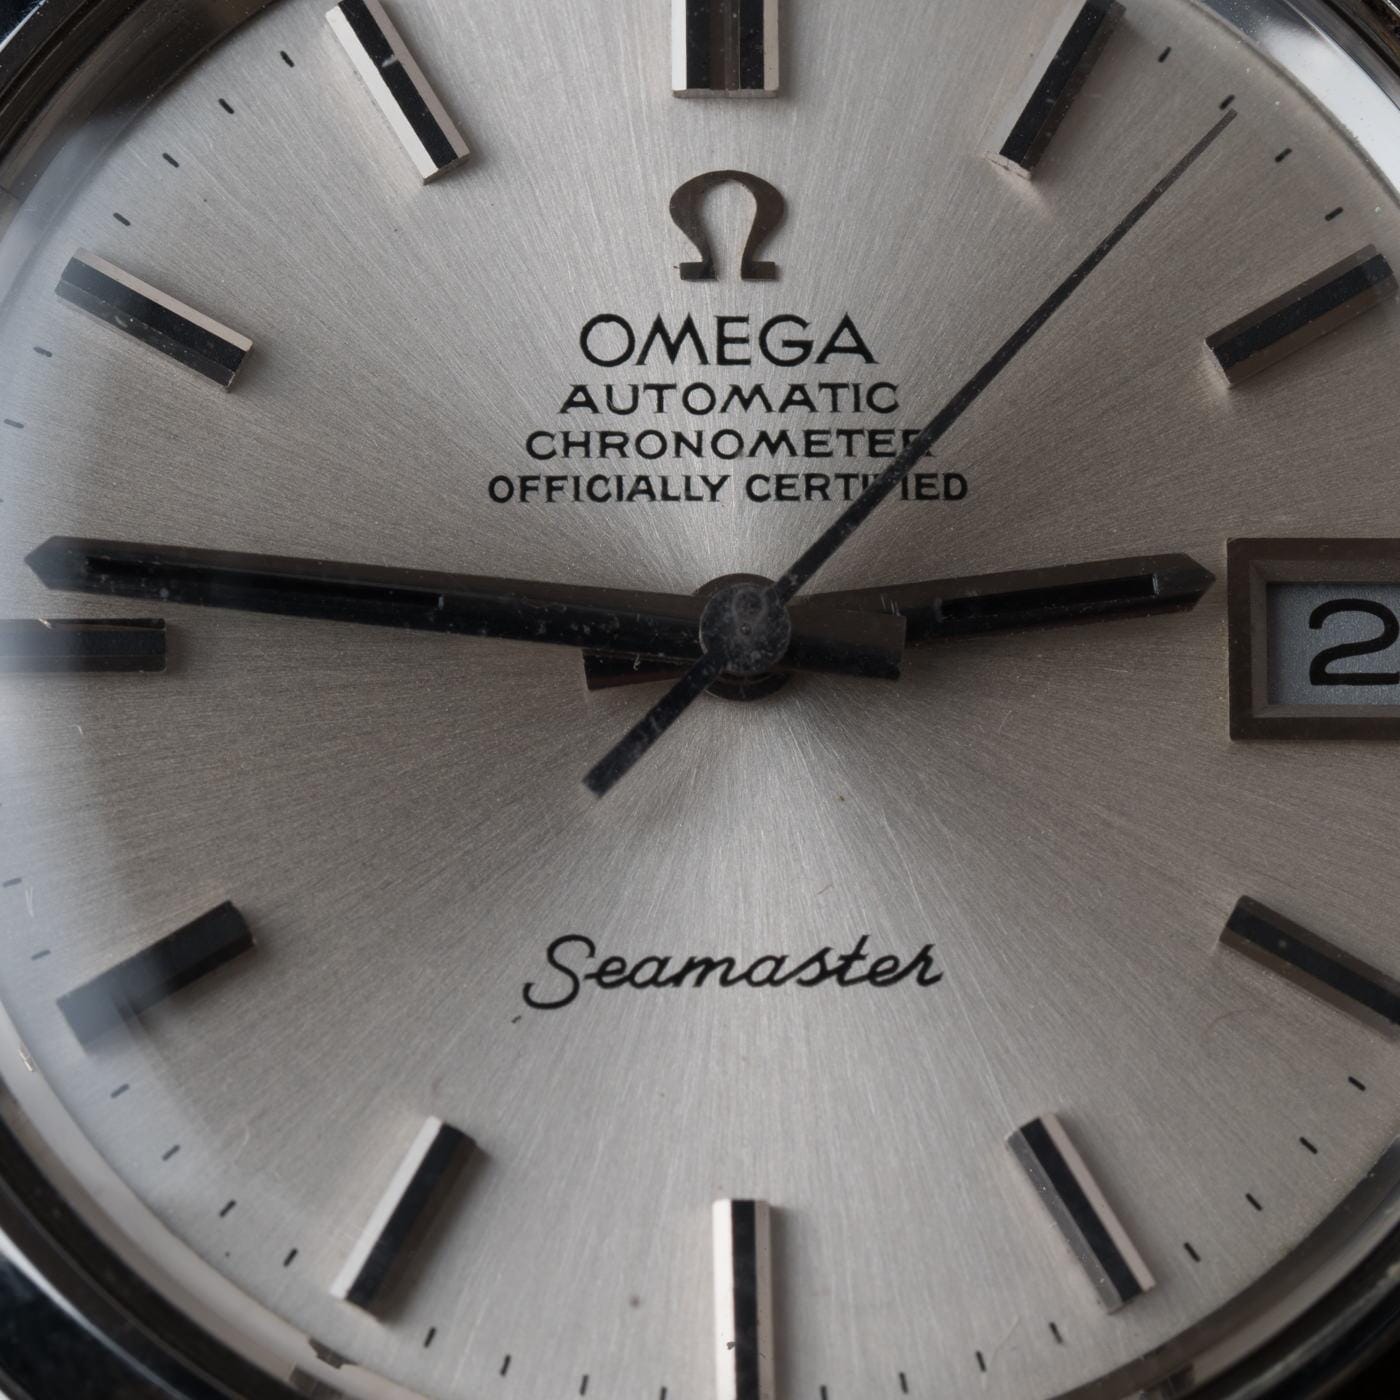 OMEGA Seamaster Chronometer (シーマスター クロノメーター) - Arbitro